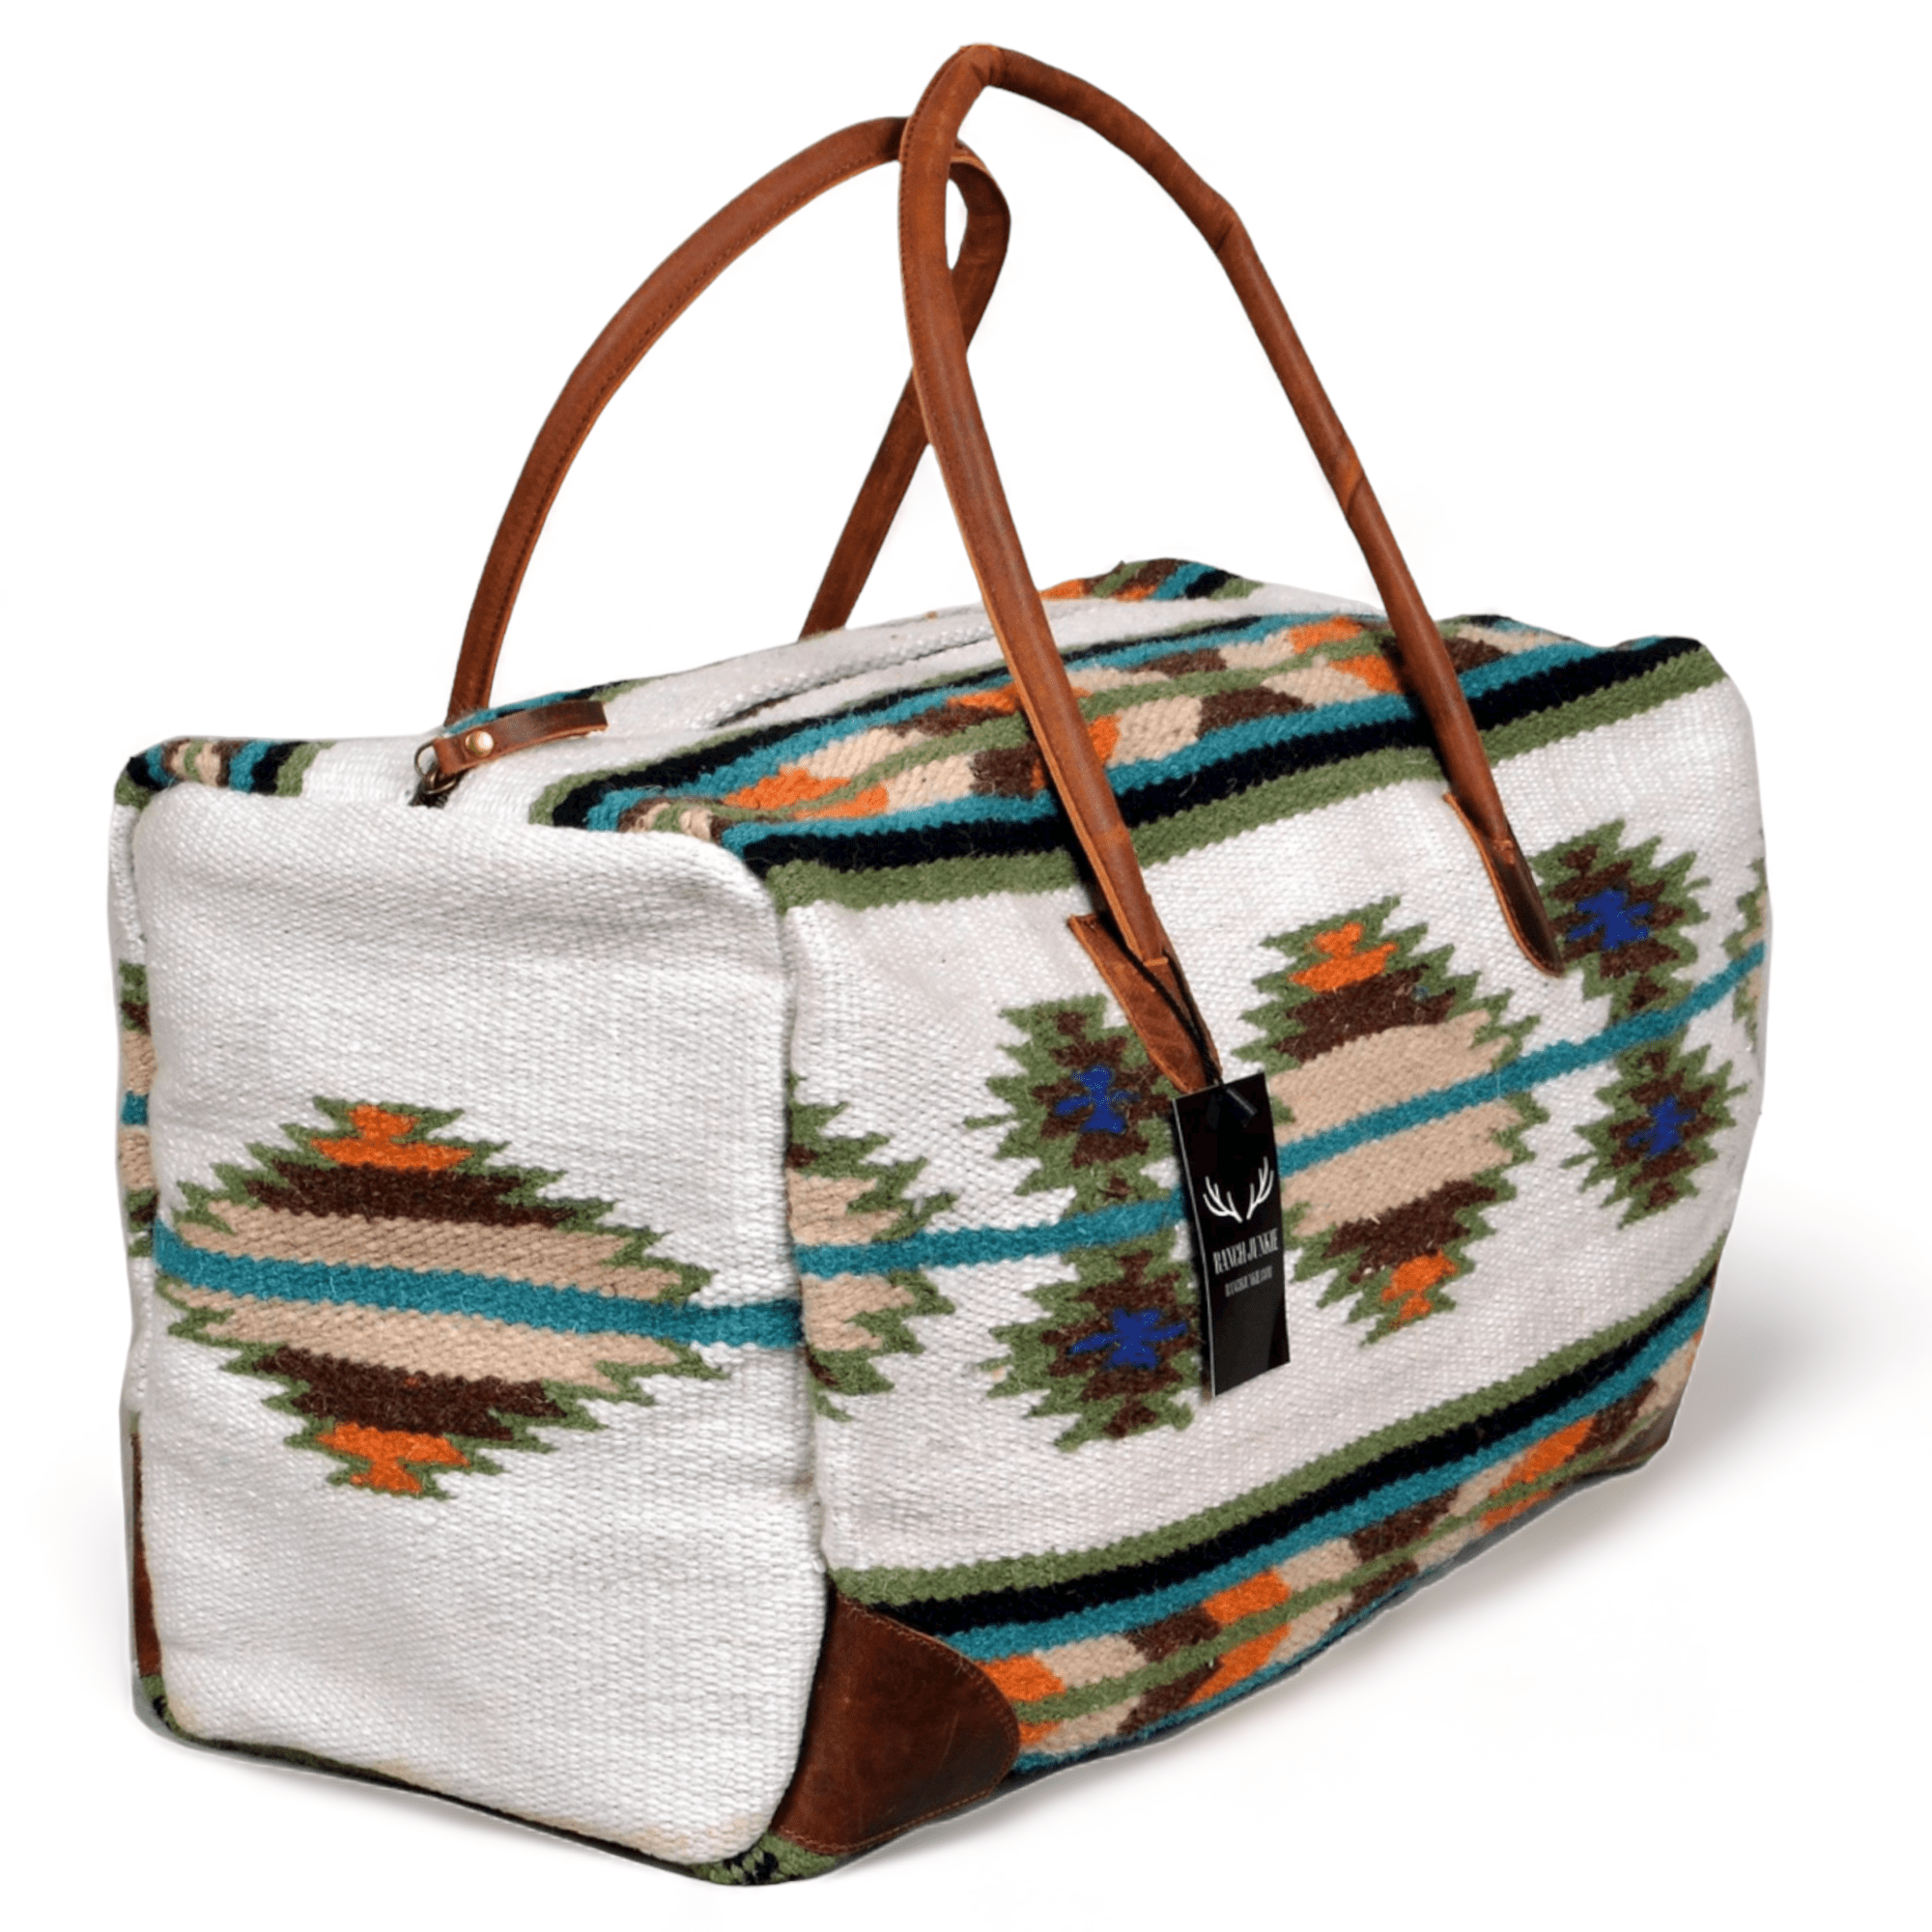 Aspen Boho Aztec Large Weekender Southwestern Duffel Bag Saddle Blanket Bag 100% Leather Handles Luggage & BagsRanch Junkie